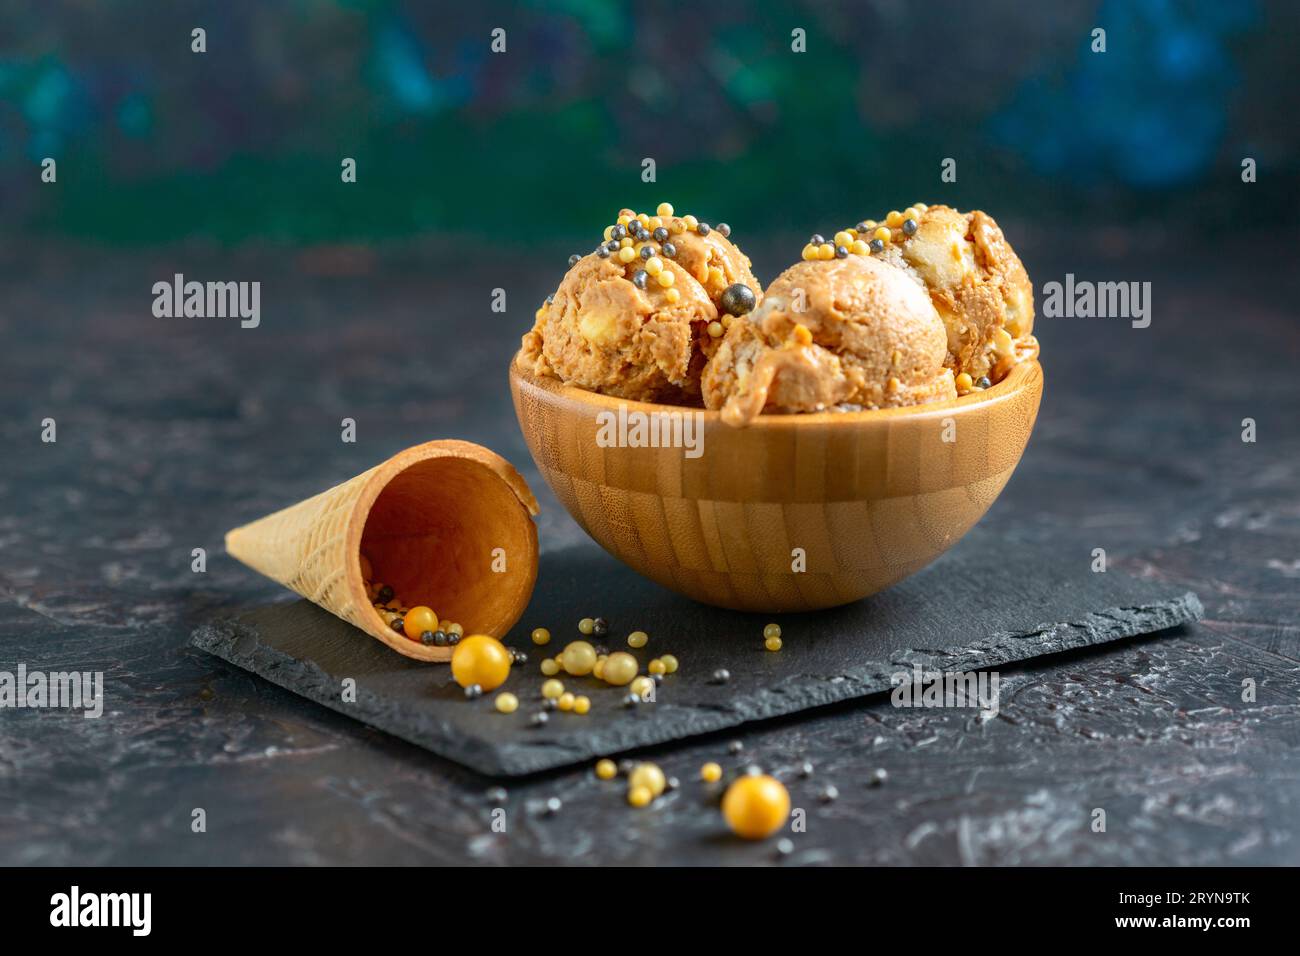 Caramel ice cream with caramel and chocolate sprinkles. Stock Photo